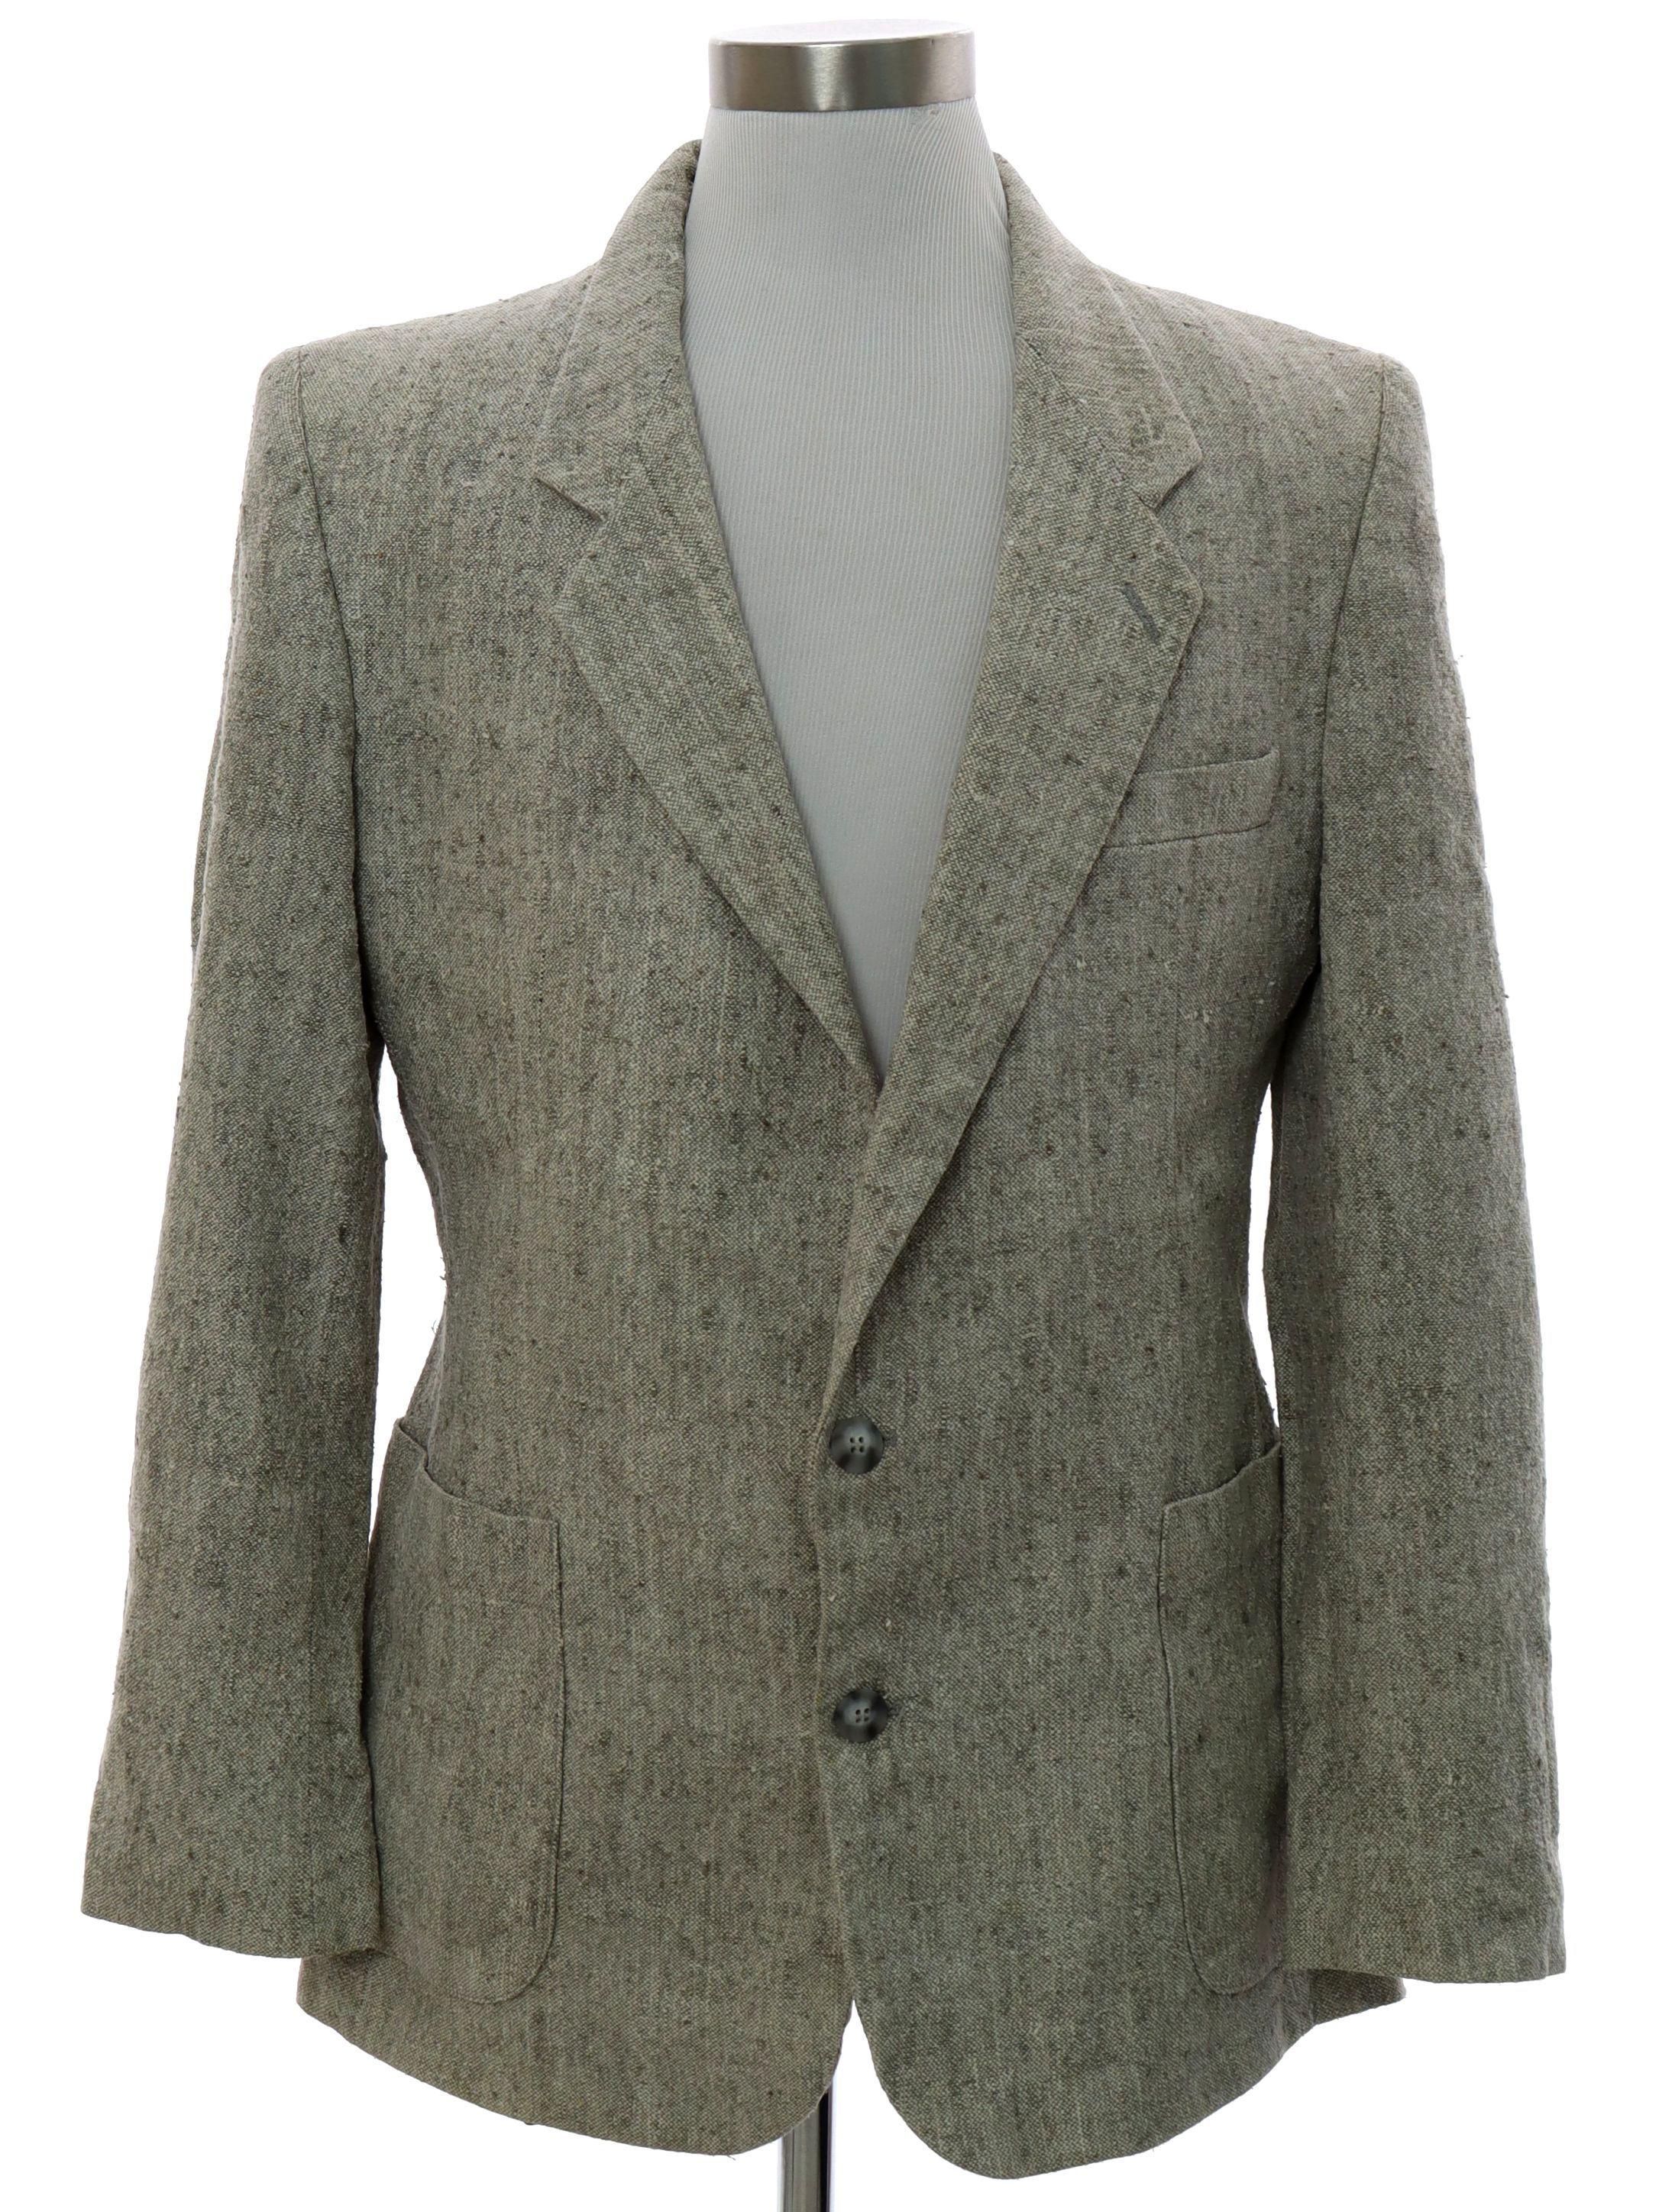 Retro 1980's Jacket (Raffinati) : 70s -Raffinati- Mens grey tweed ...